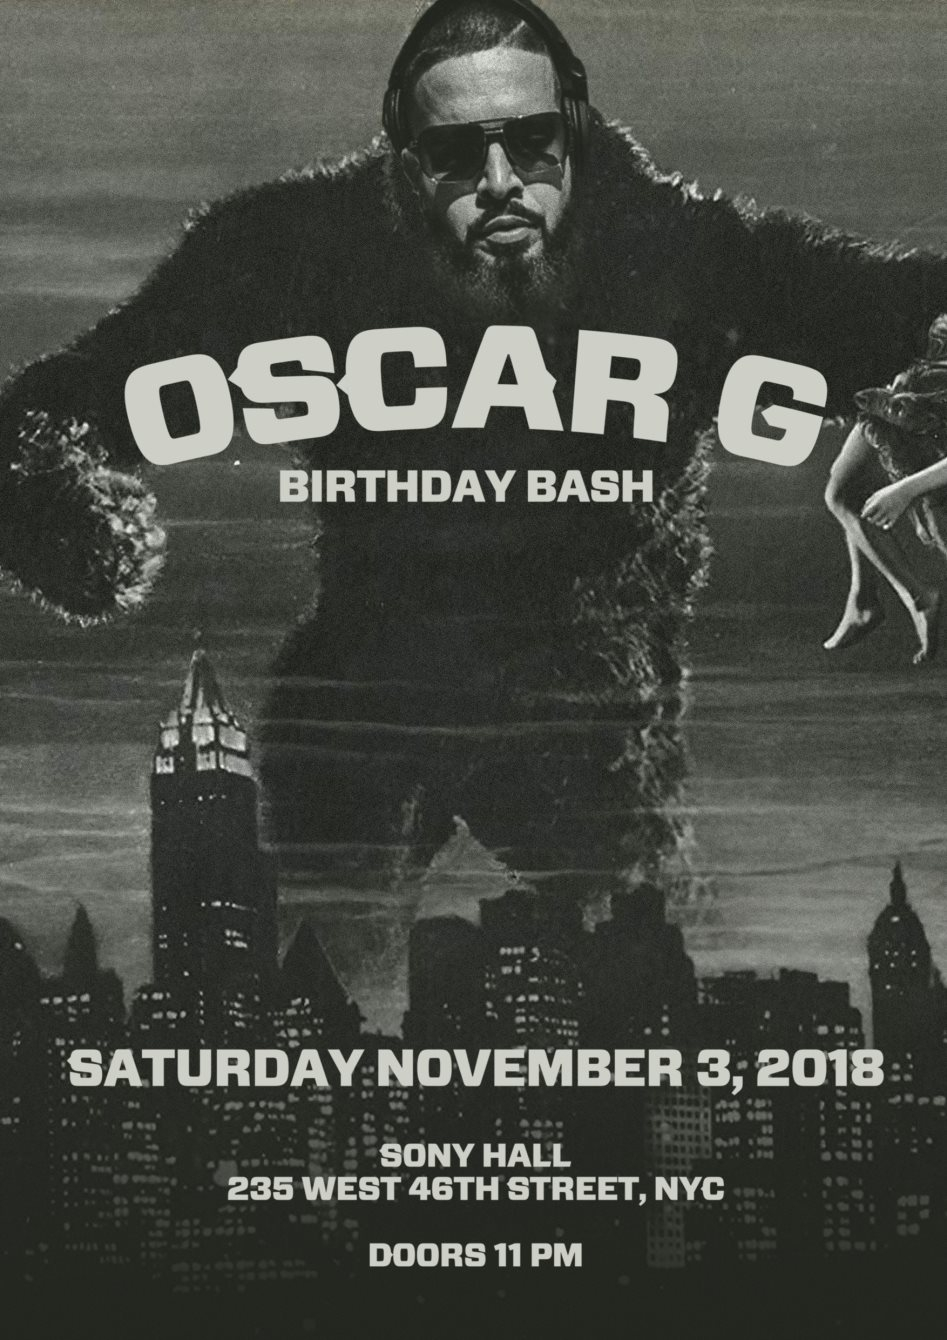 Oscar G: Birthday Bash - Flyer back